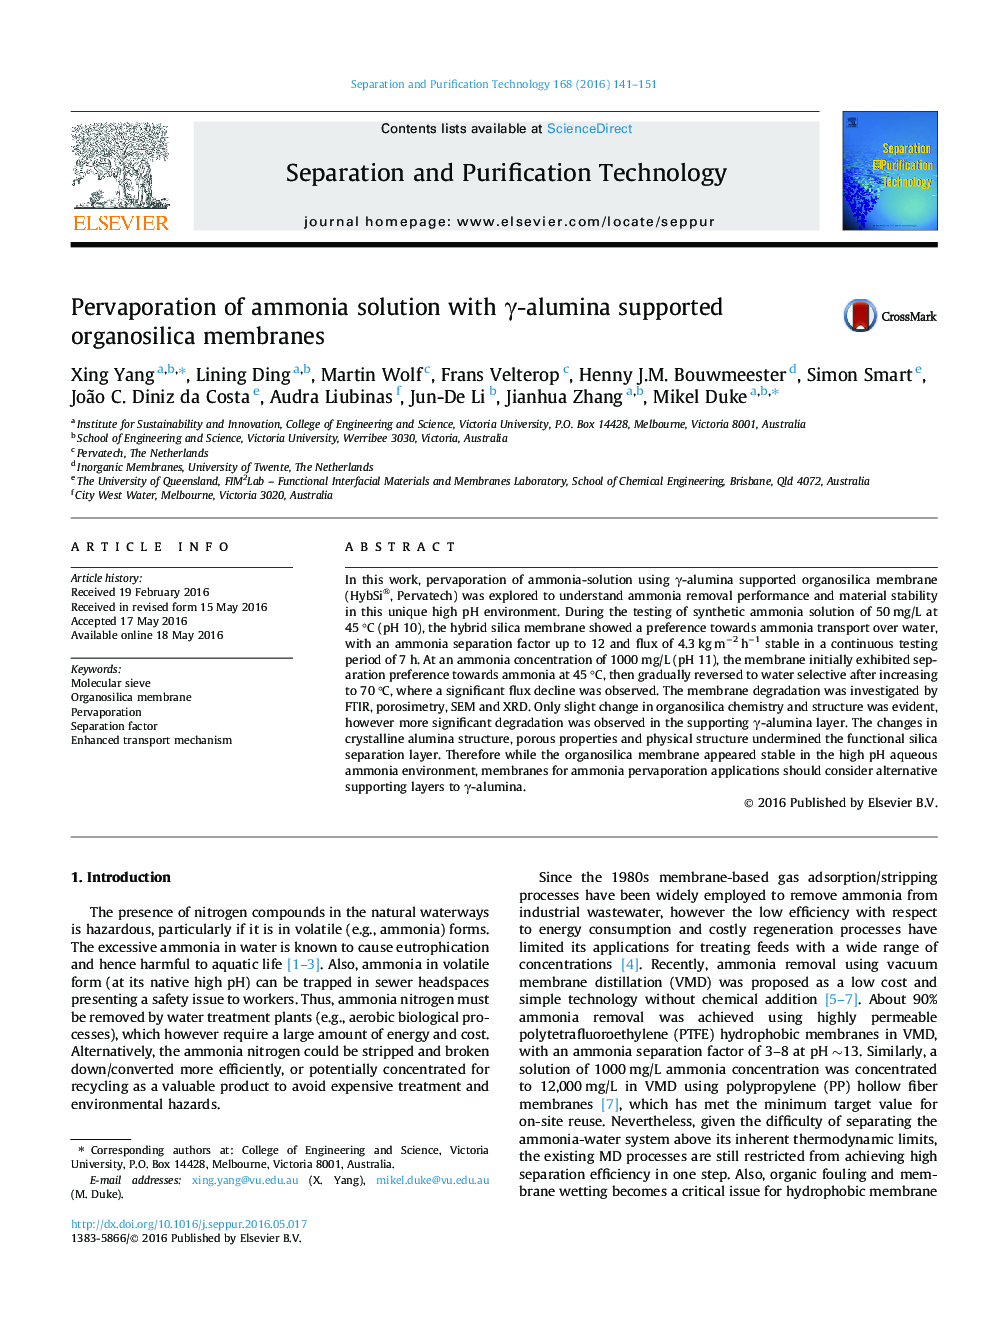 Pervaporation of ammonia solution with γ-alumina supported organosilica membranes